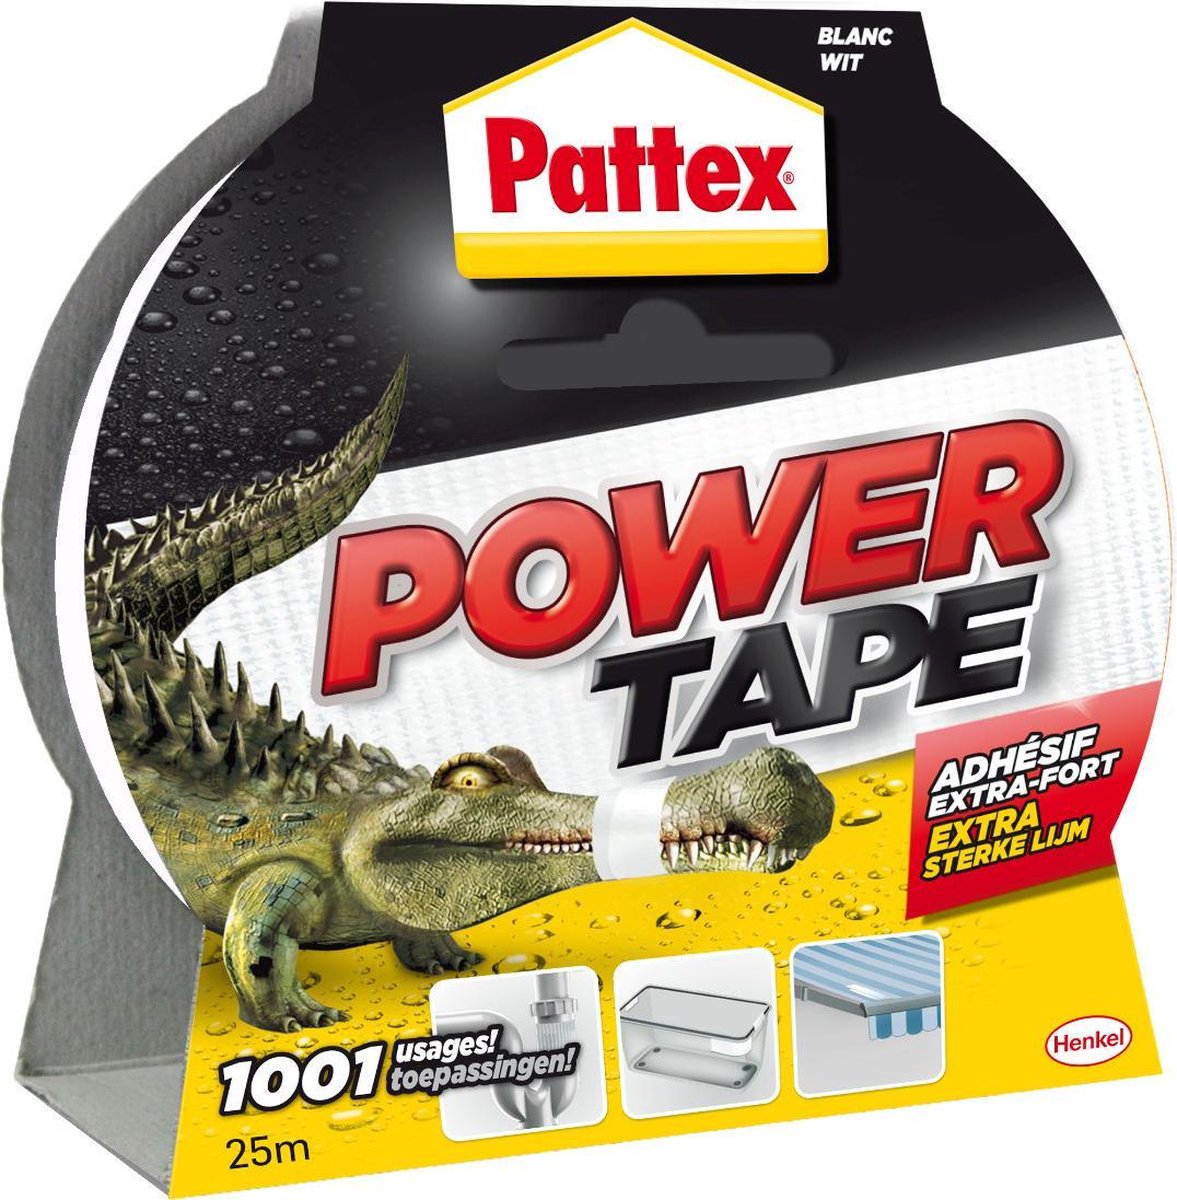 Pattex Power Tape 25m WIT- Ducttape Ducktape - Waterdicht - Extreem sterk - Premium Grip - Duct Duck tape